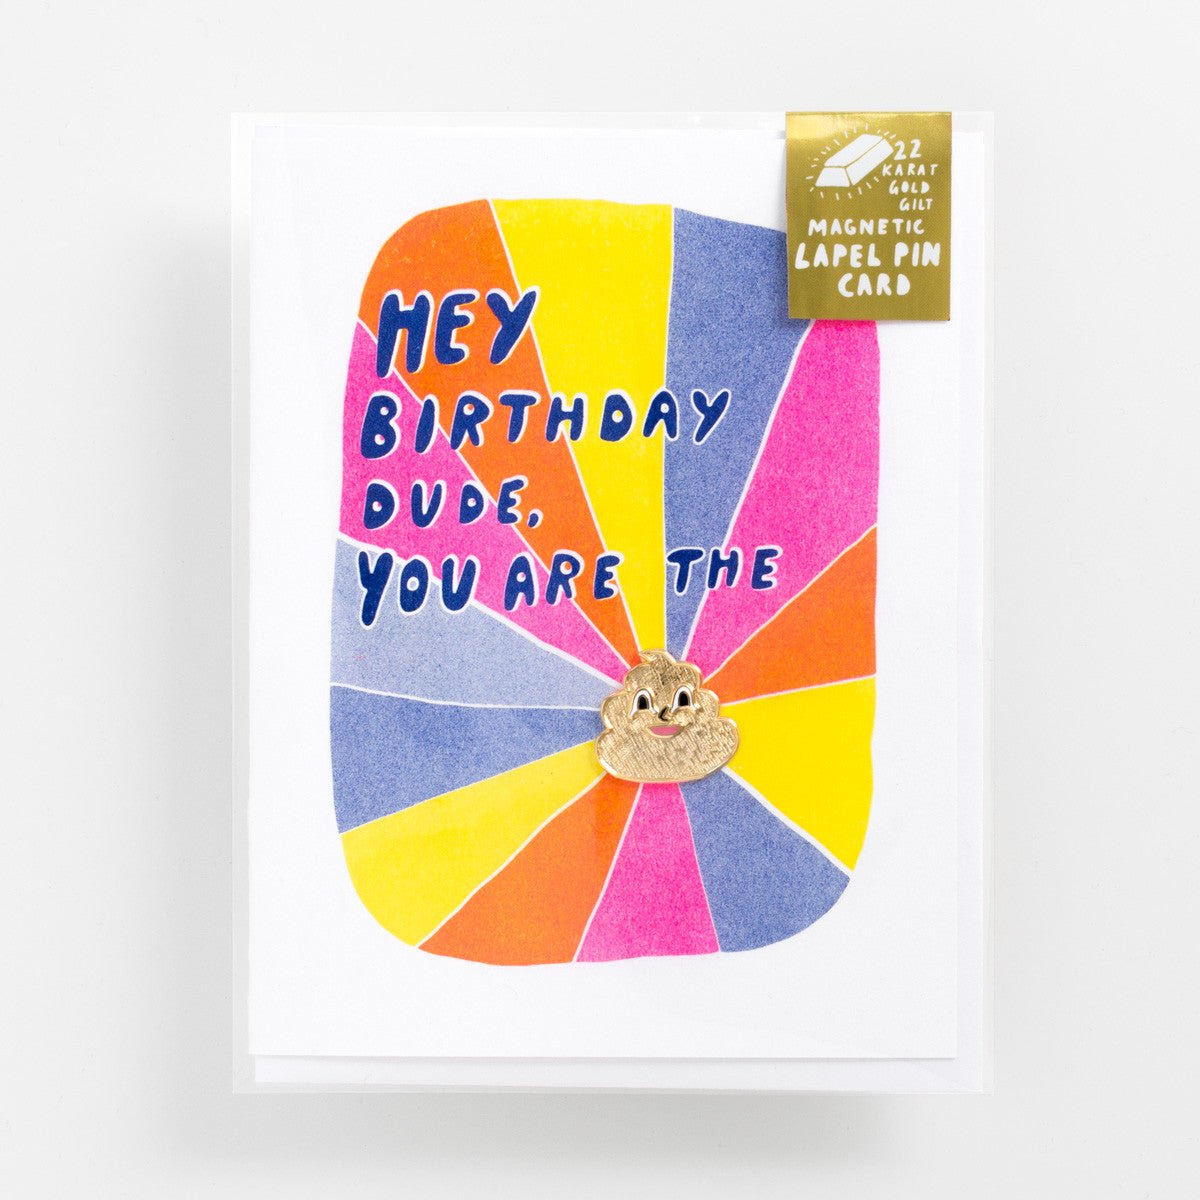 Hey Birthday Dude - Lapel Pin Card - Yellow Owl Workshop